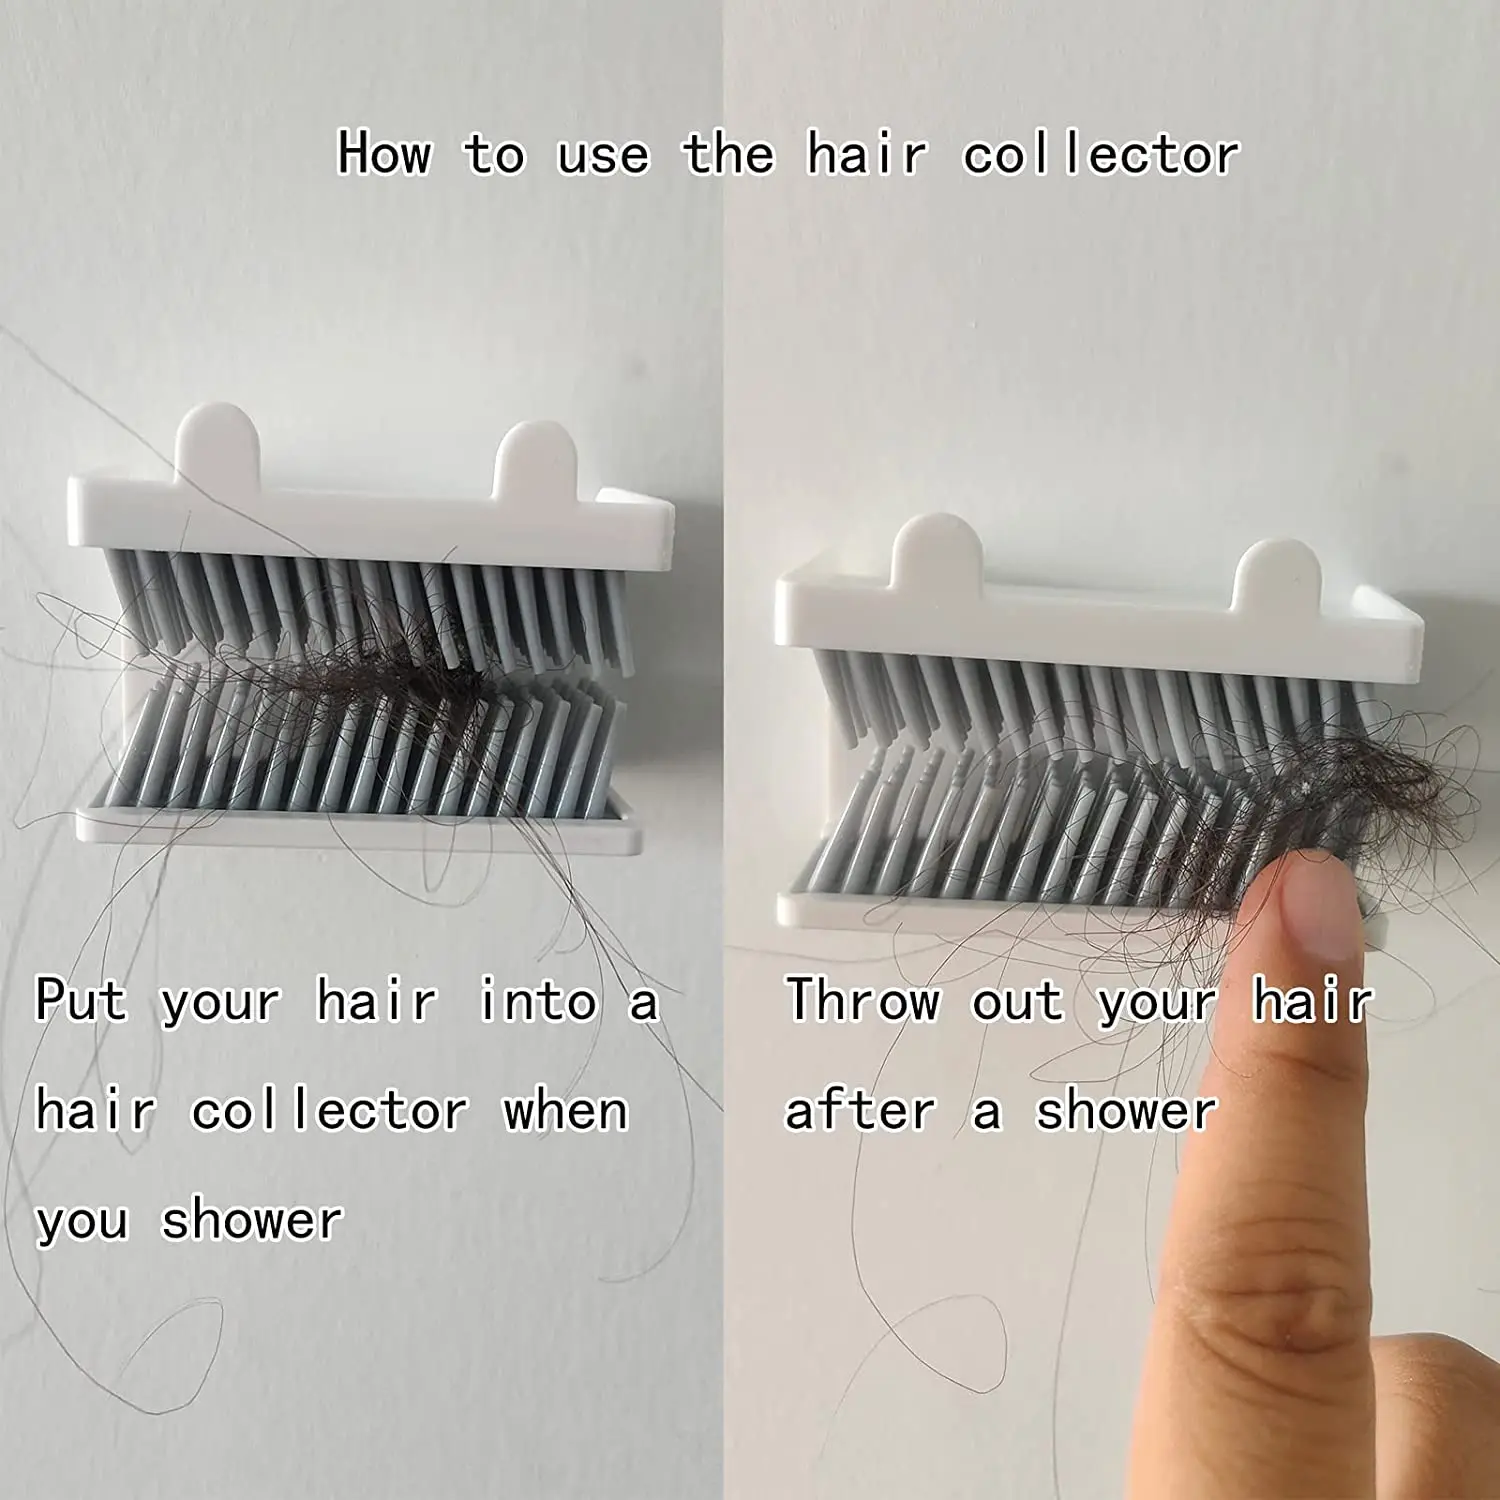 INVIHUG Shower Wall Hair Catcher, Hair Trap for Shower, Hair Catcher